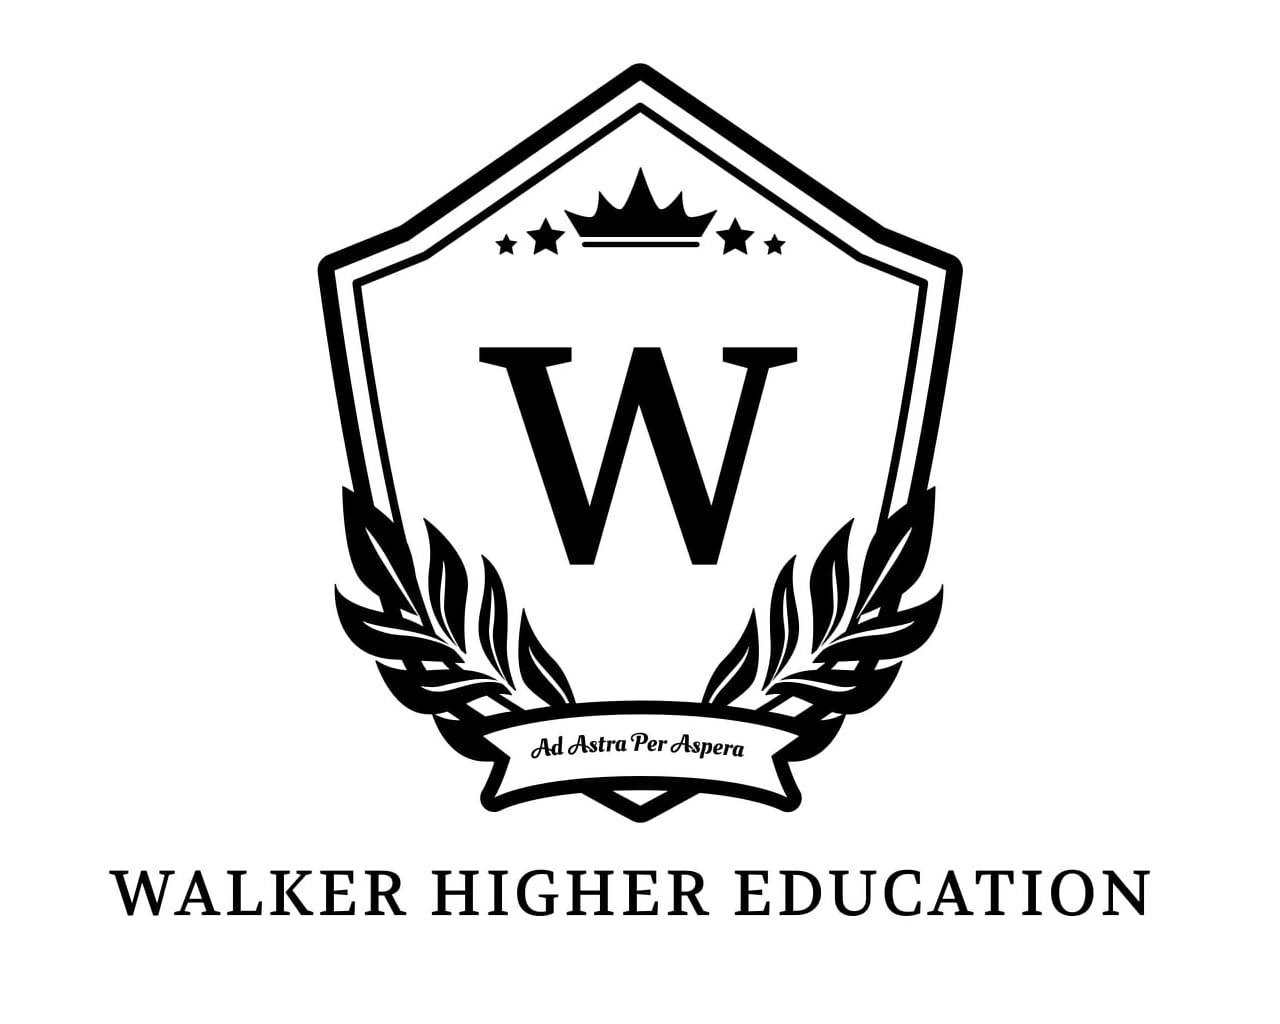  WALKER HIGHER EDUCATION, AD ASTRA PER ASPERA, W